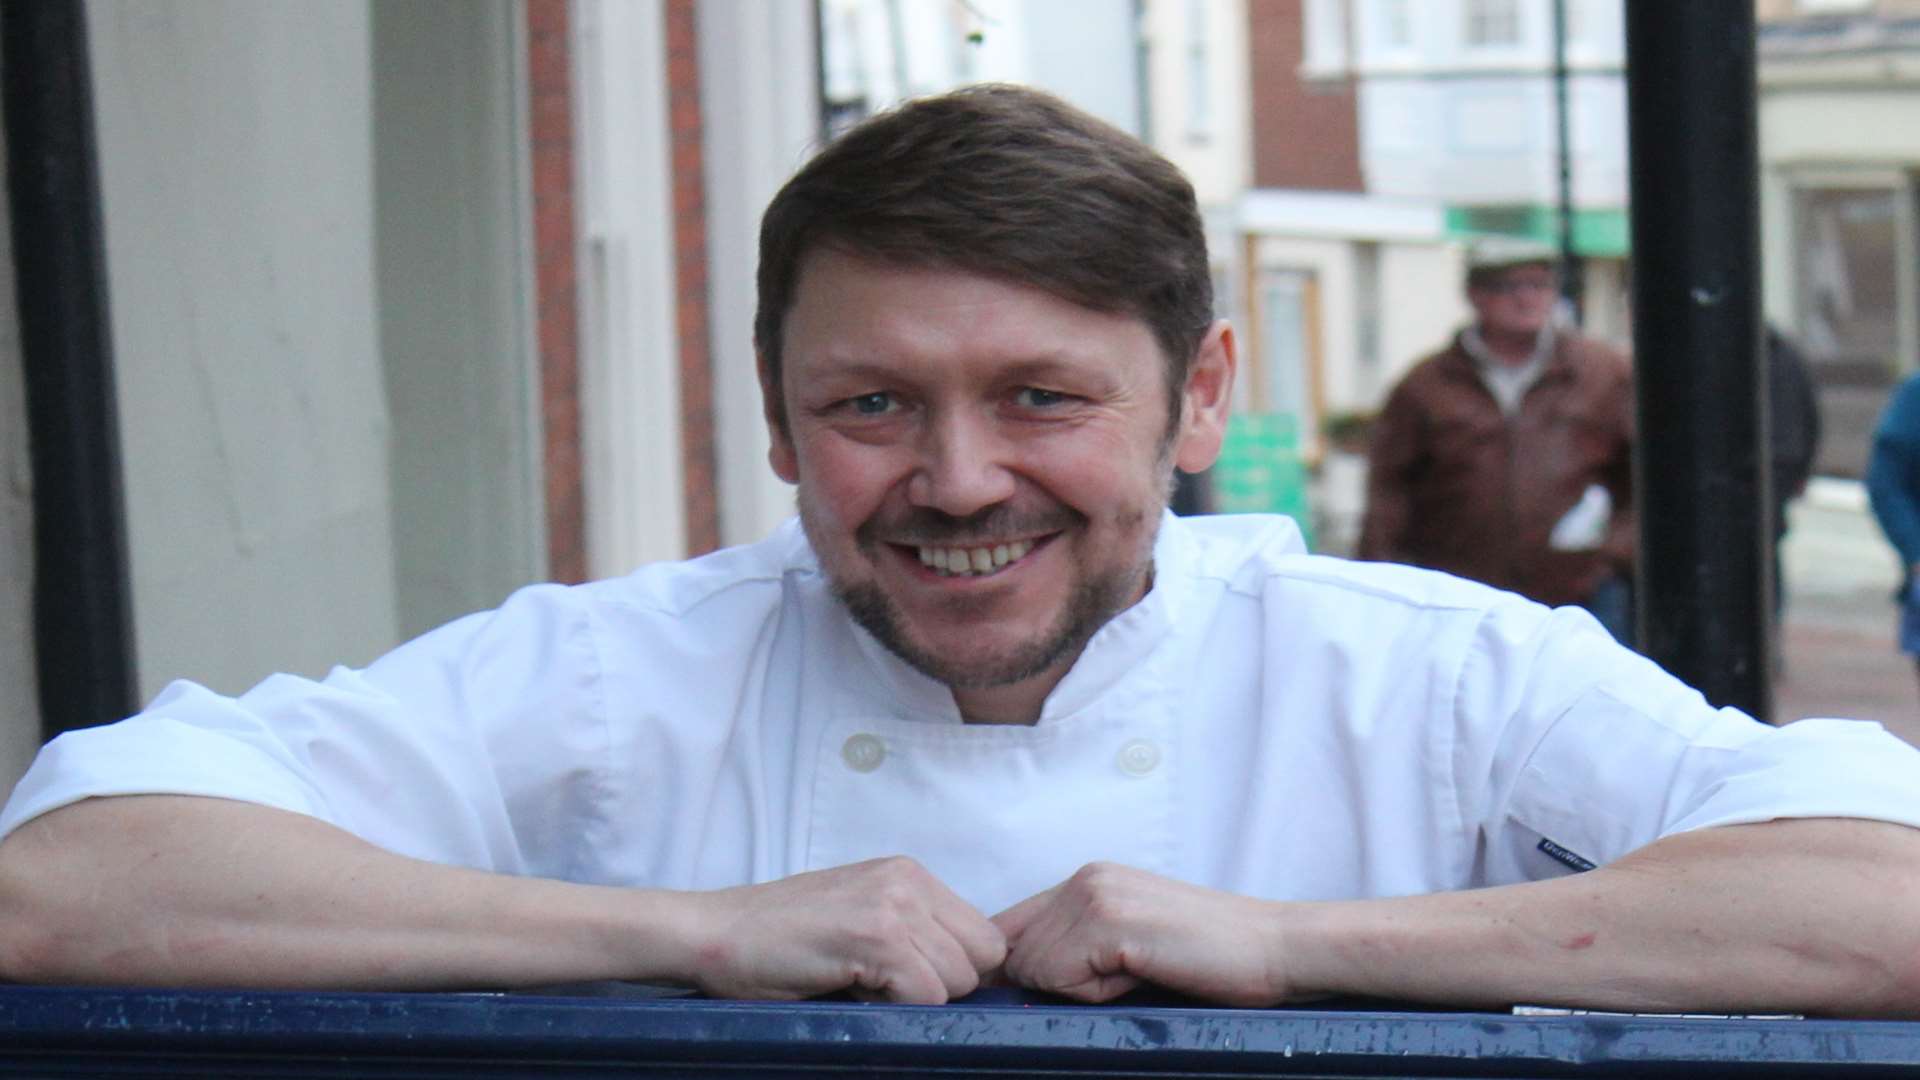 Alistair Lycett, head chef at Shepherd Neam's Sun Inn